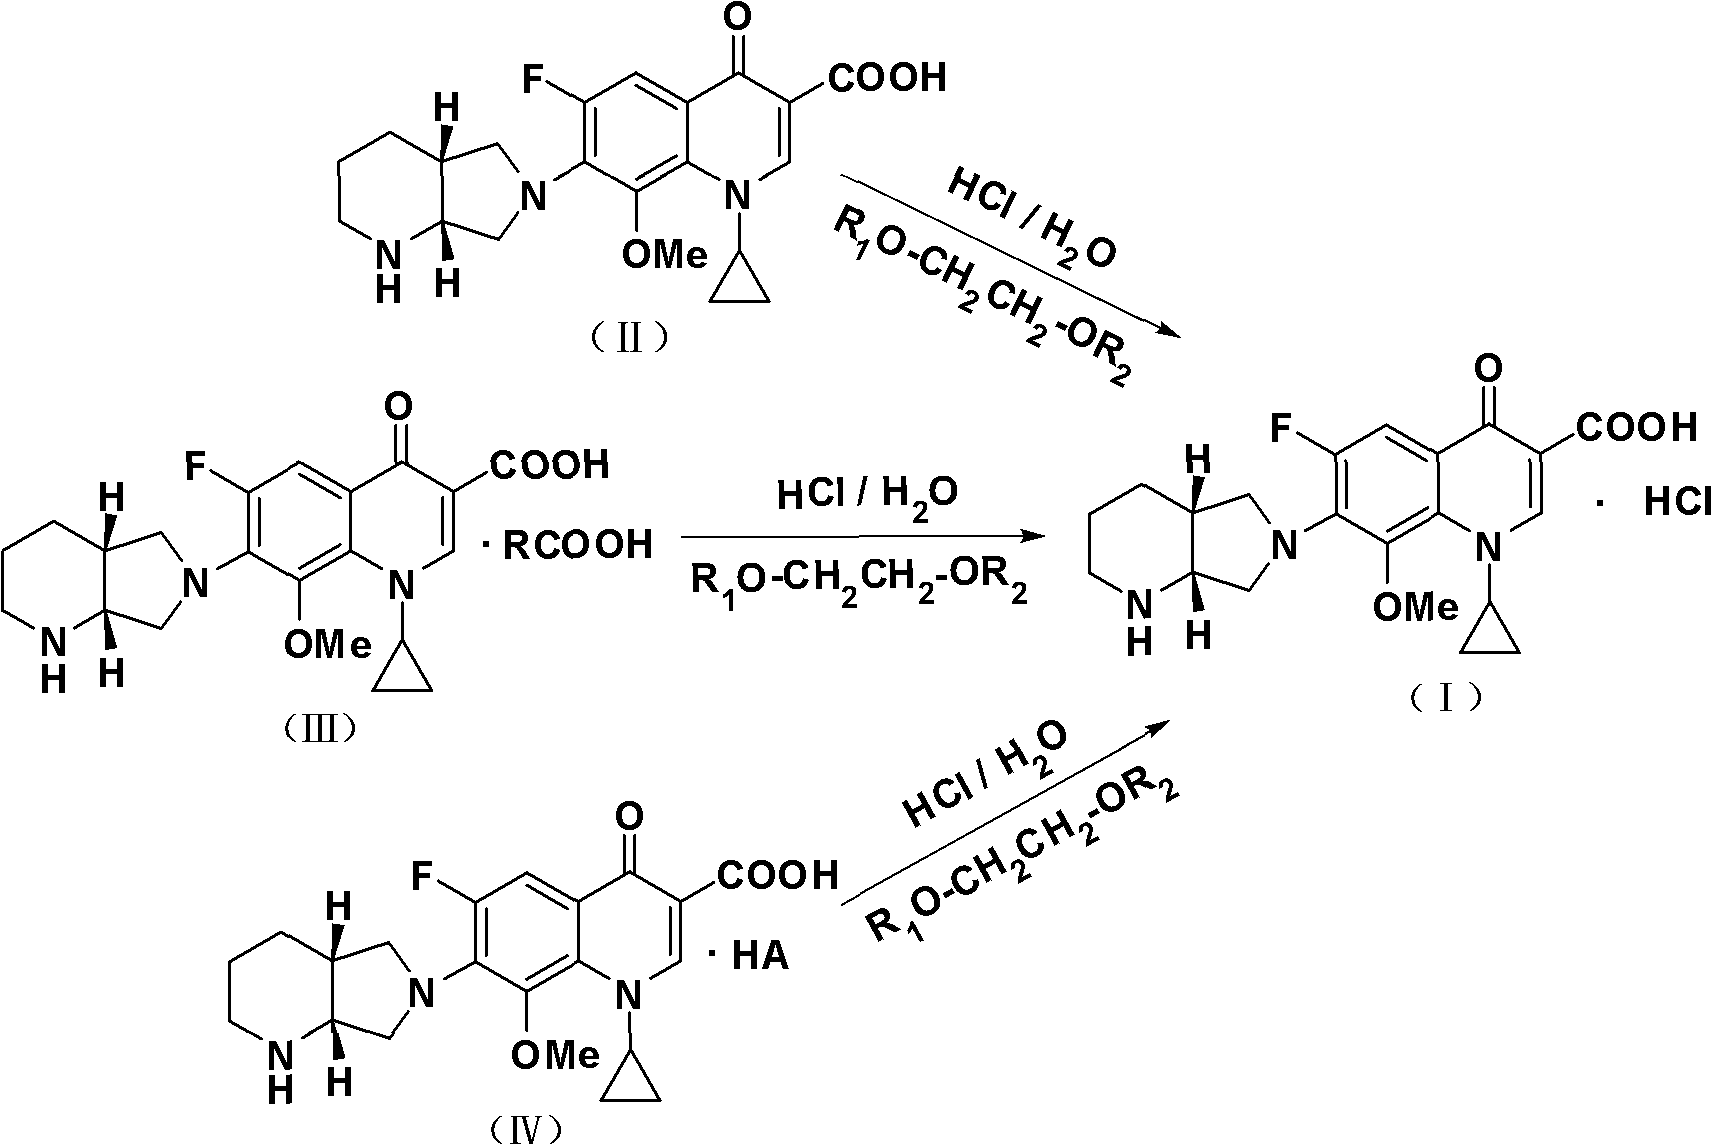 Process for crystallizing moxifloxacin hydrochloride